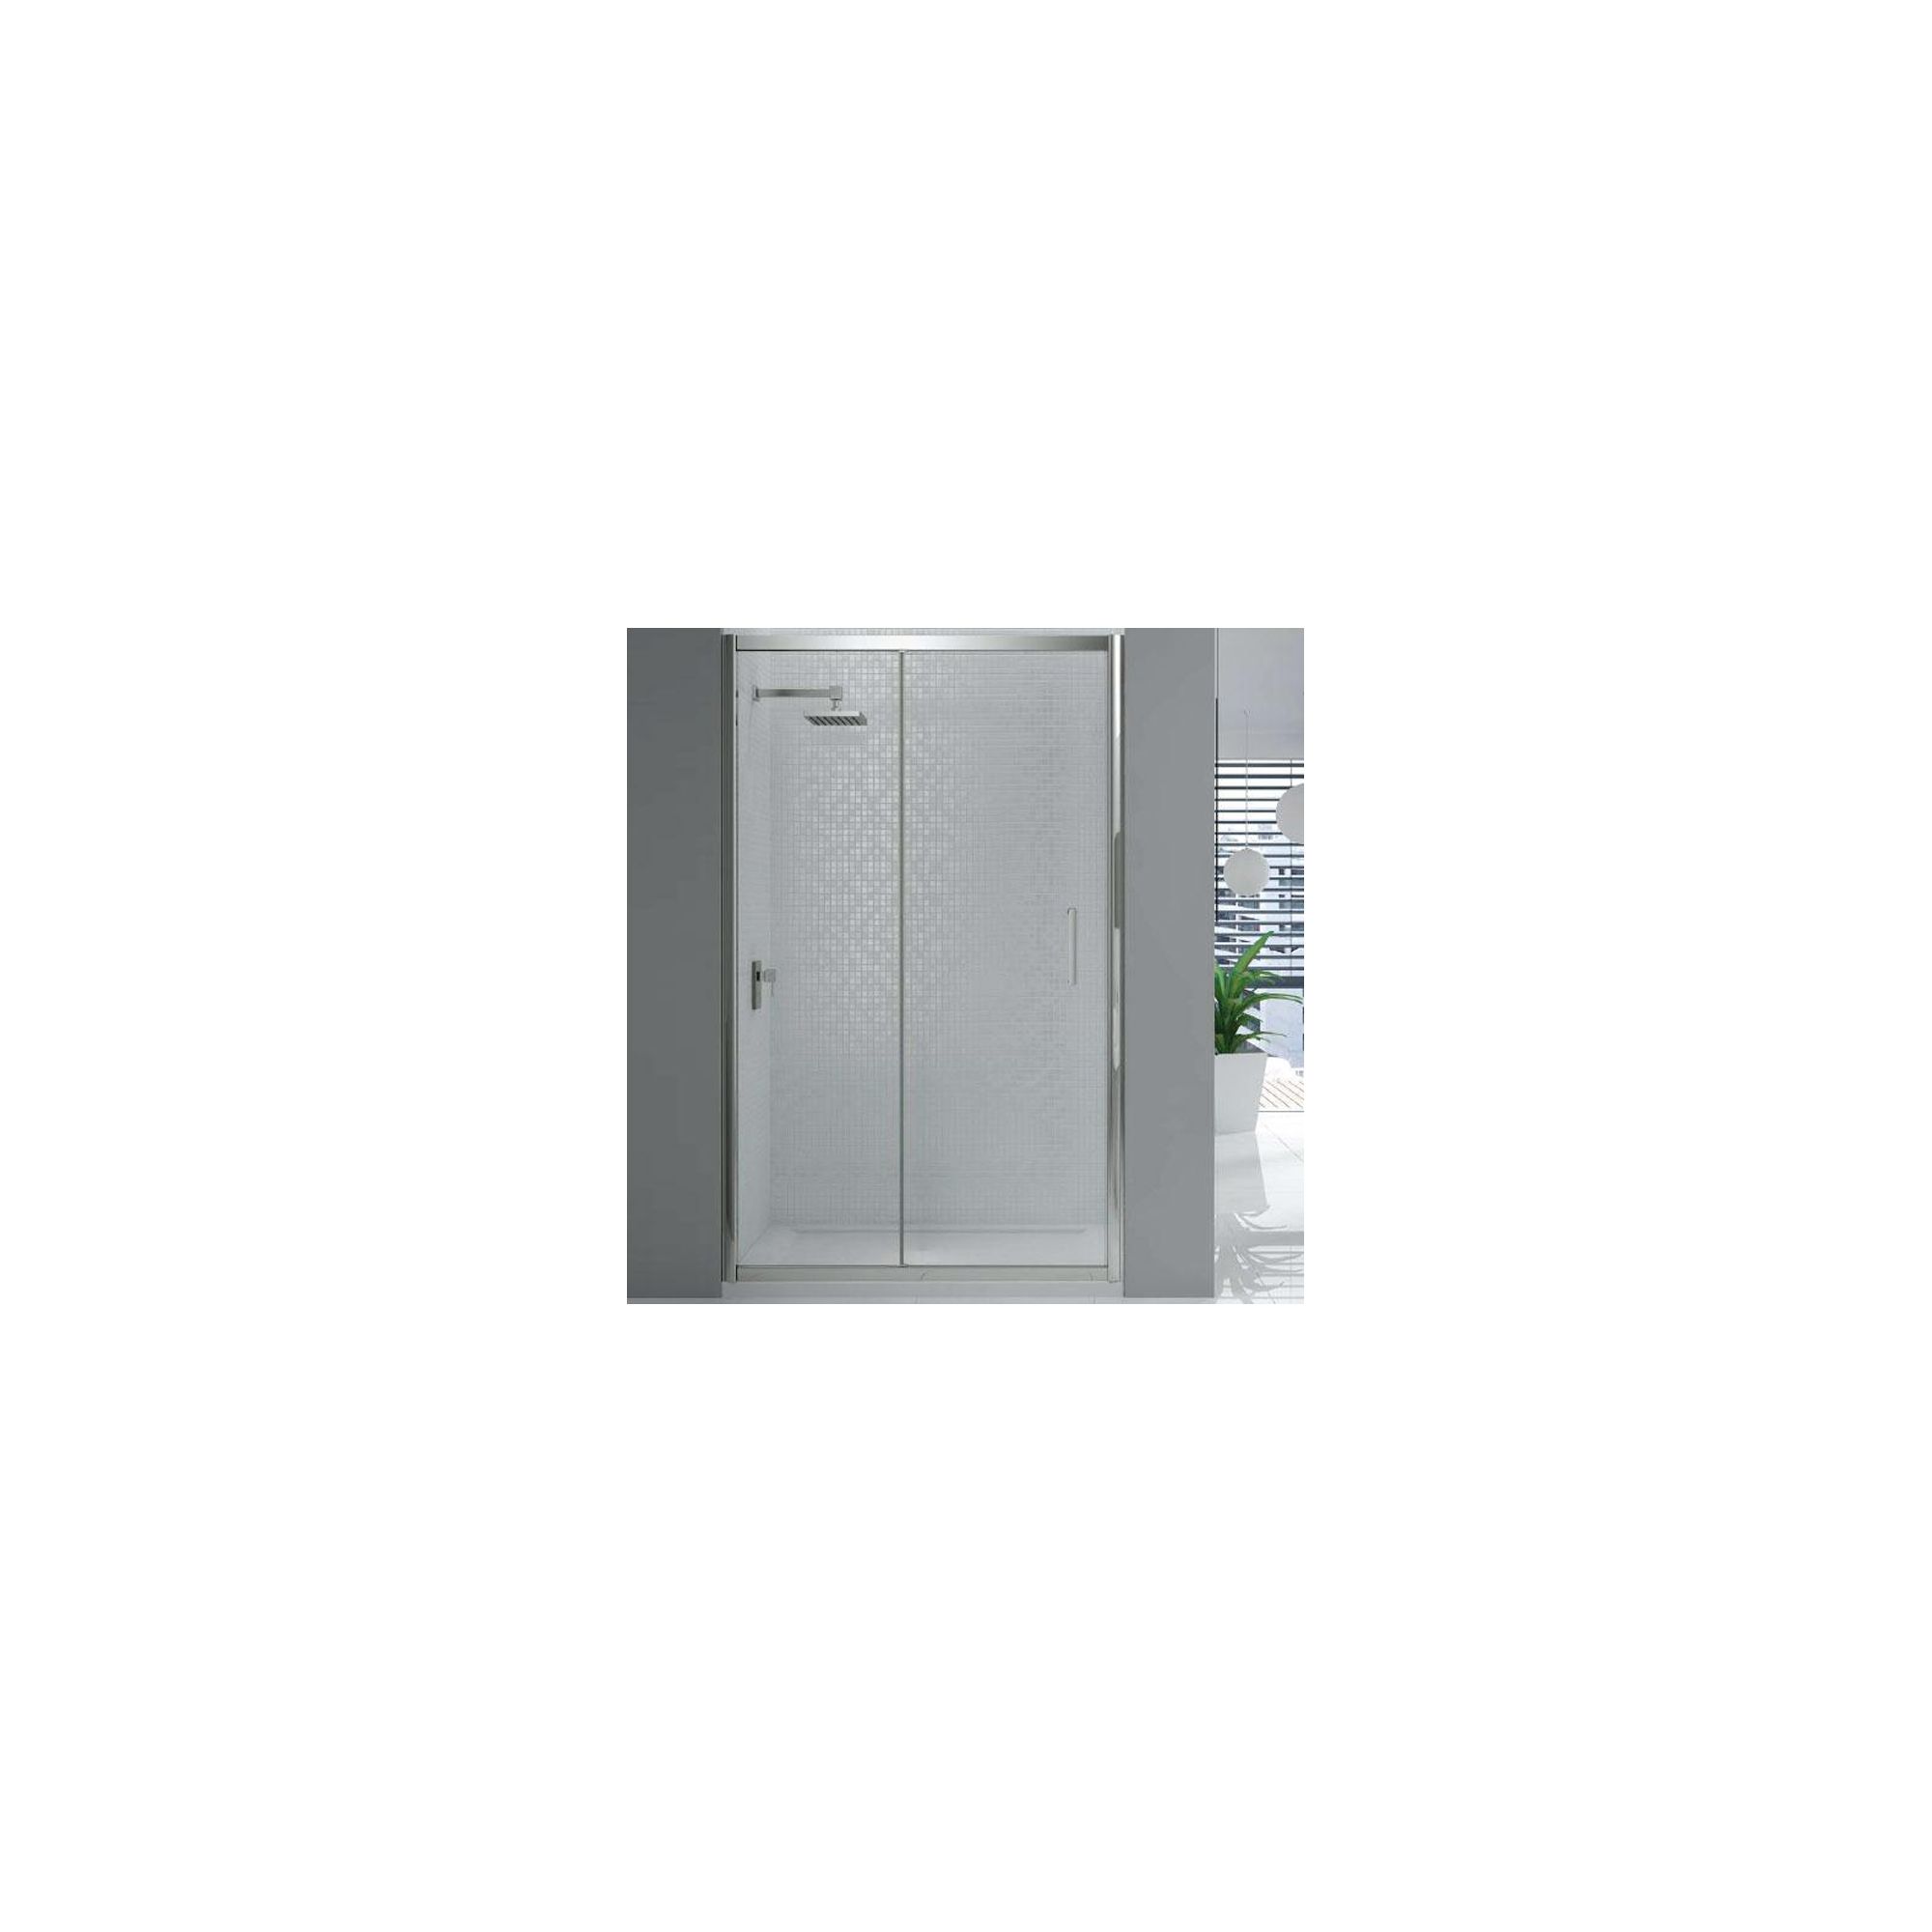 Merlyn Vivid Six Sliding Shower Door, 1700mm Wide, 6mm Glass at Tesco Direct